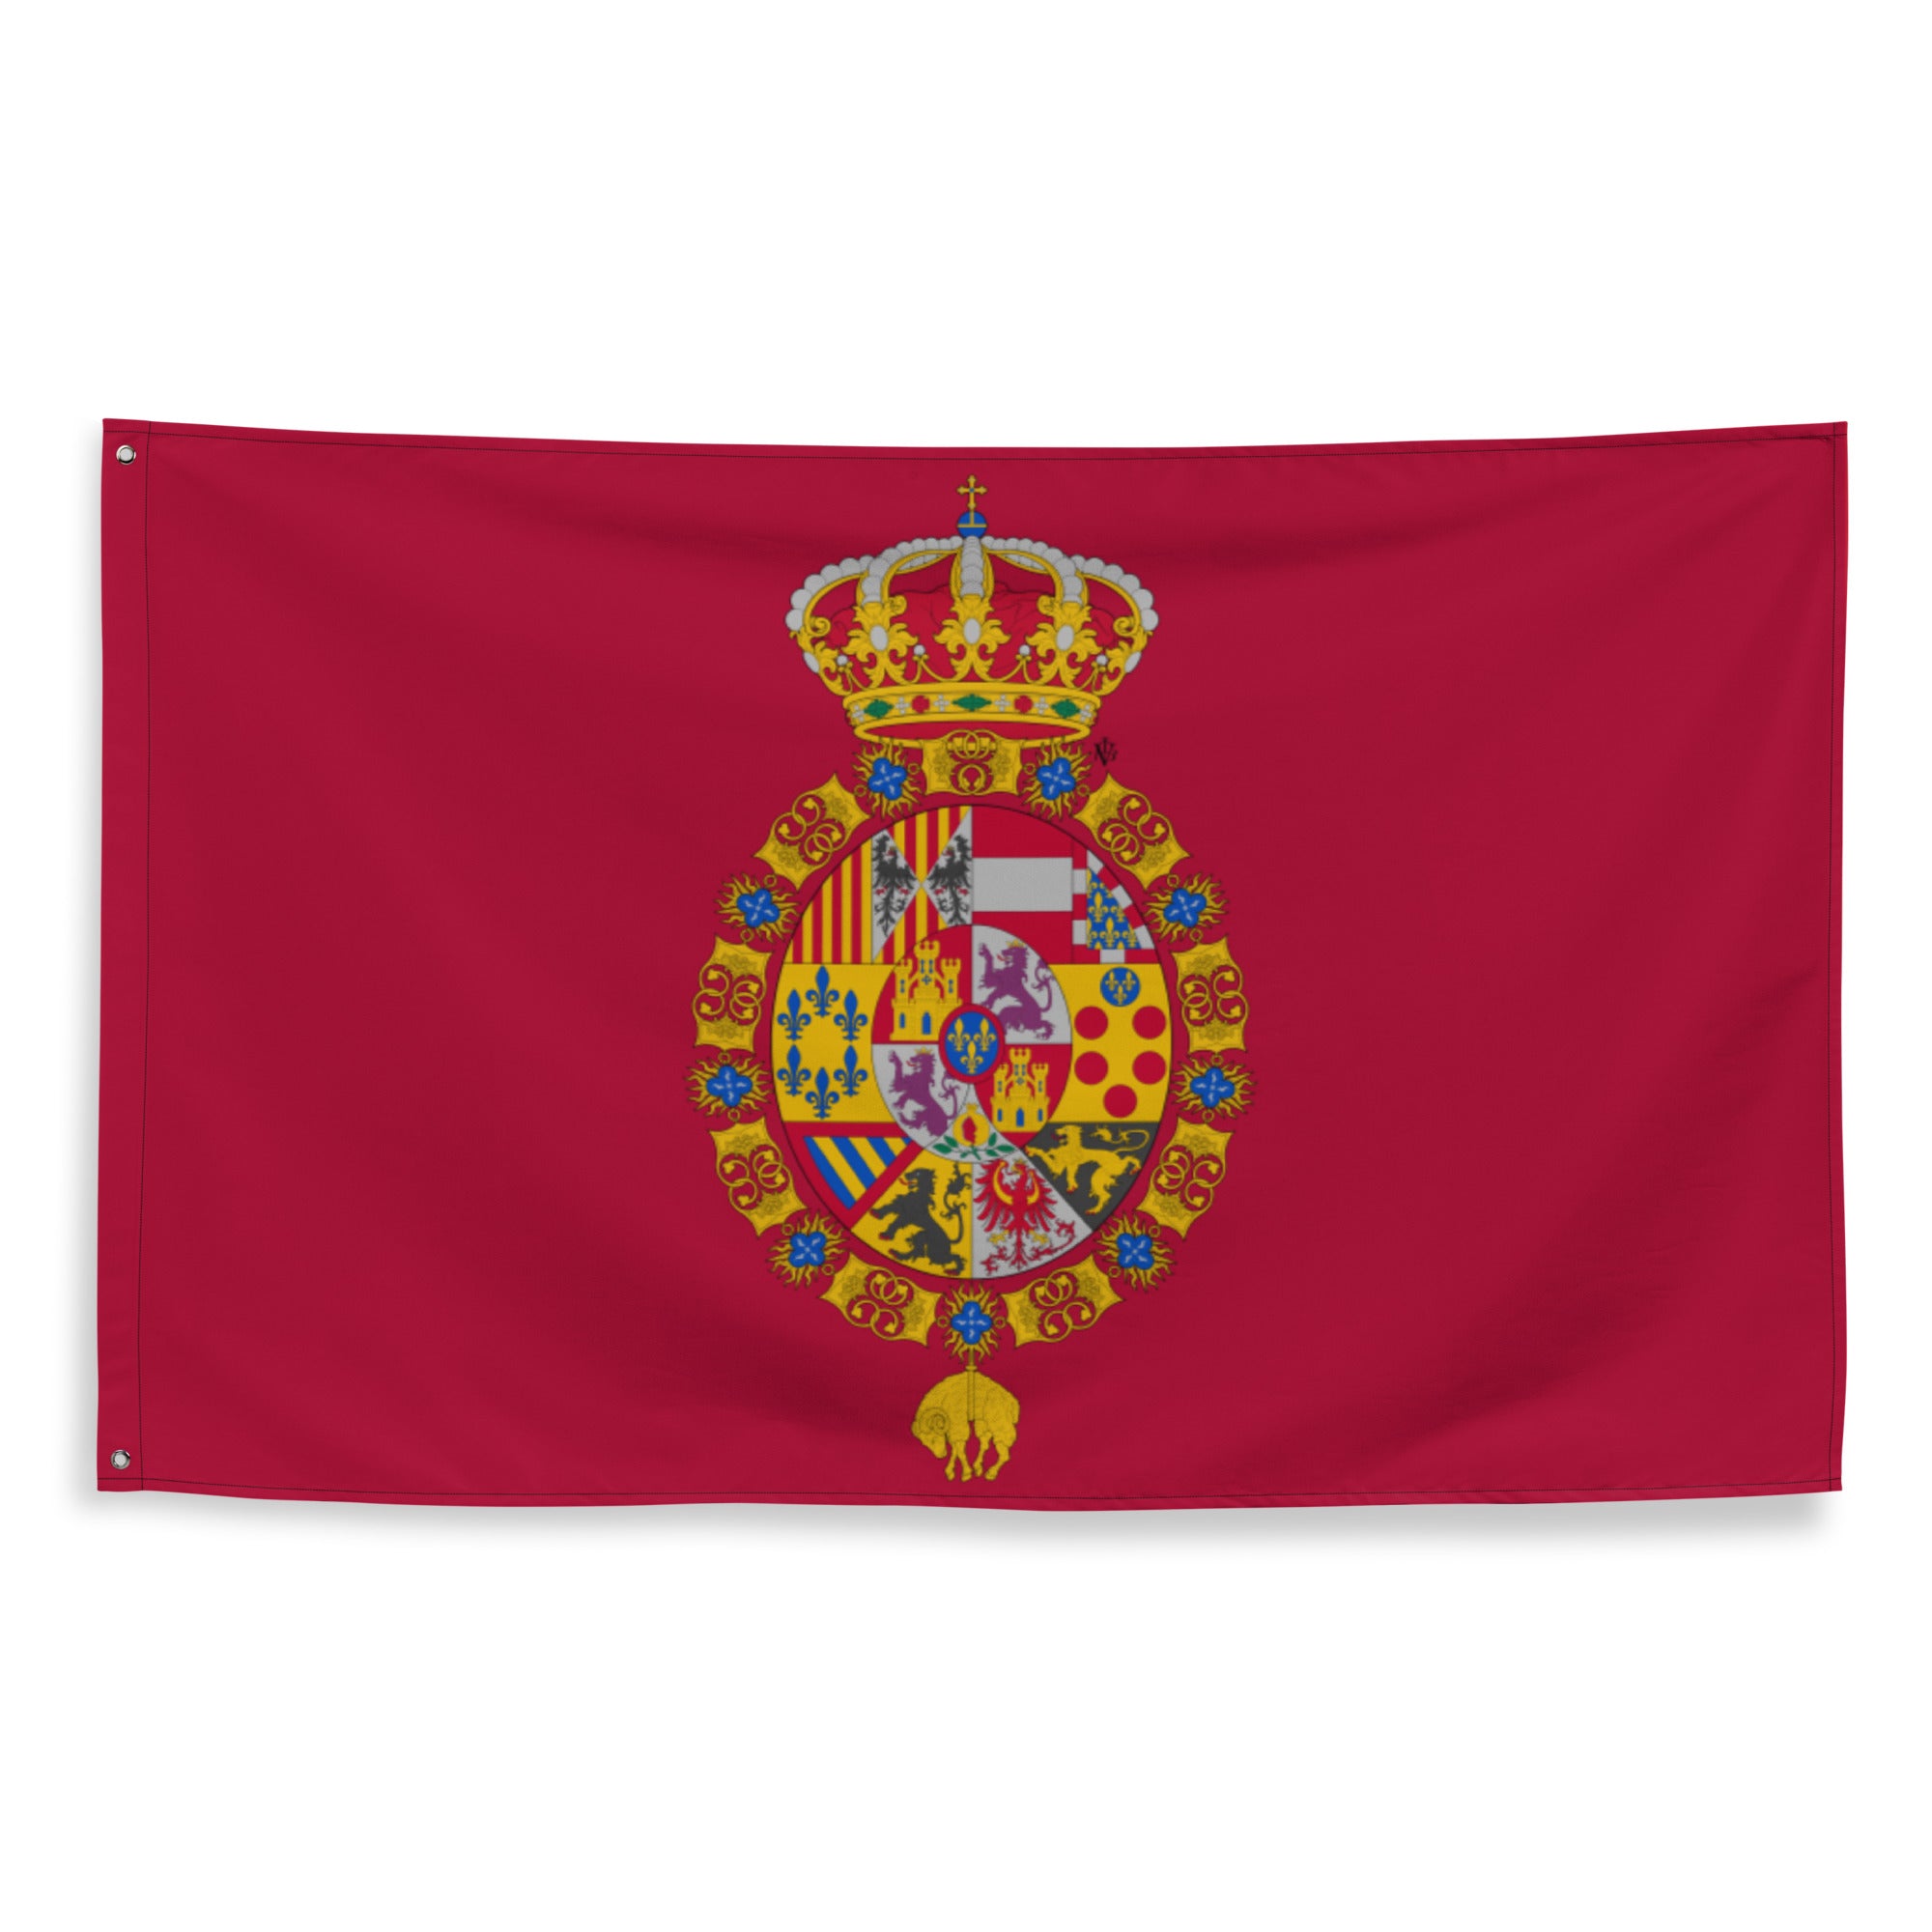 Bandeira Real (Bourbons d.1761)